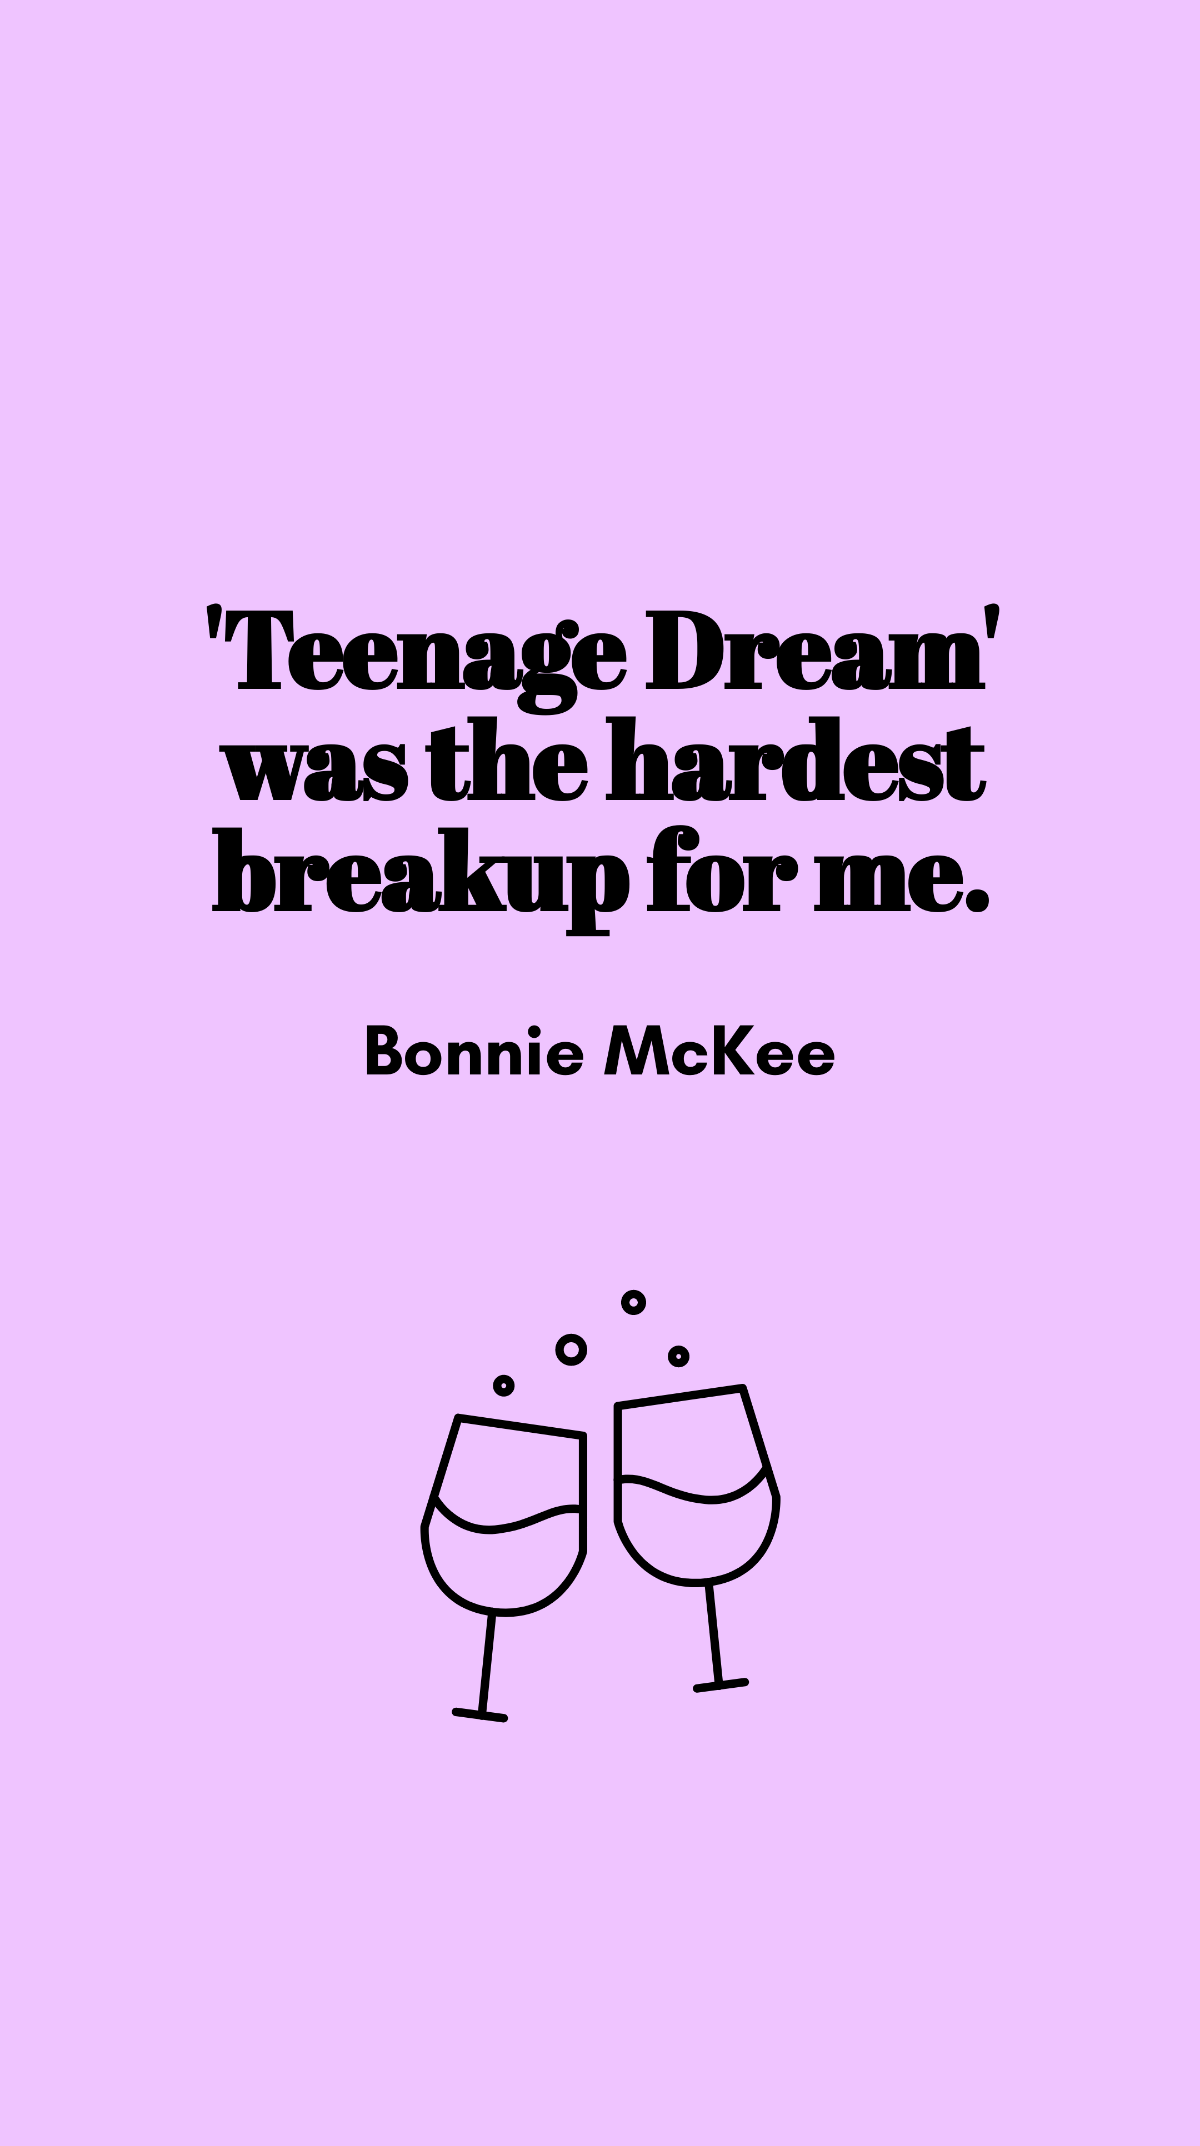 Bonnie McKee - 'Teenage Dream' was the hardest breakup for me.